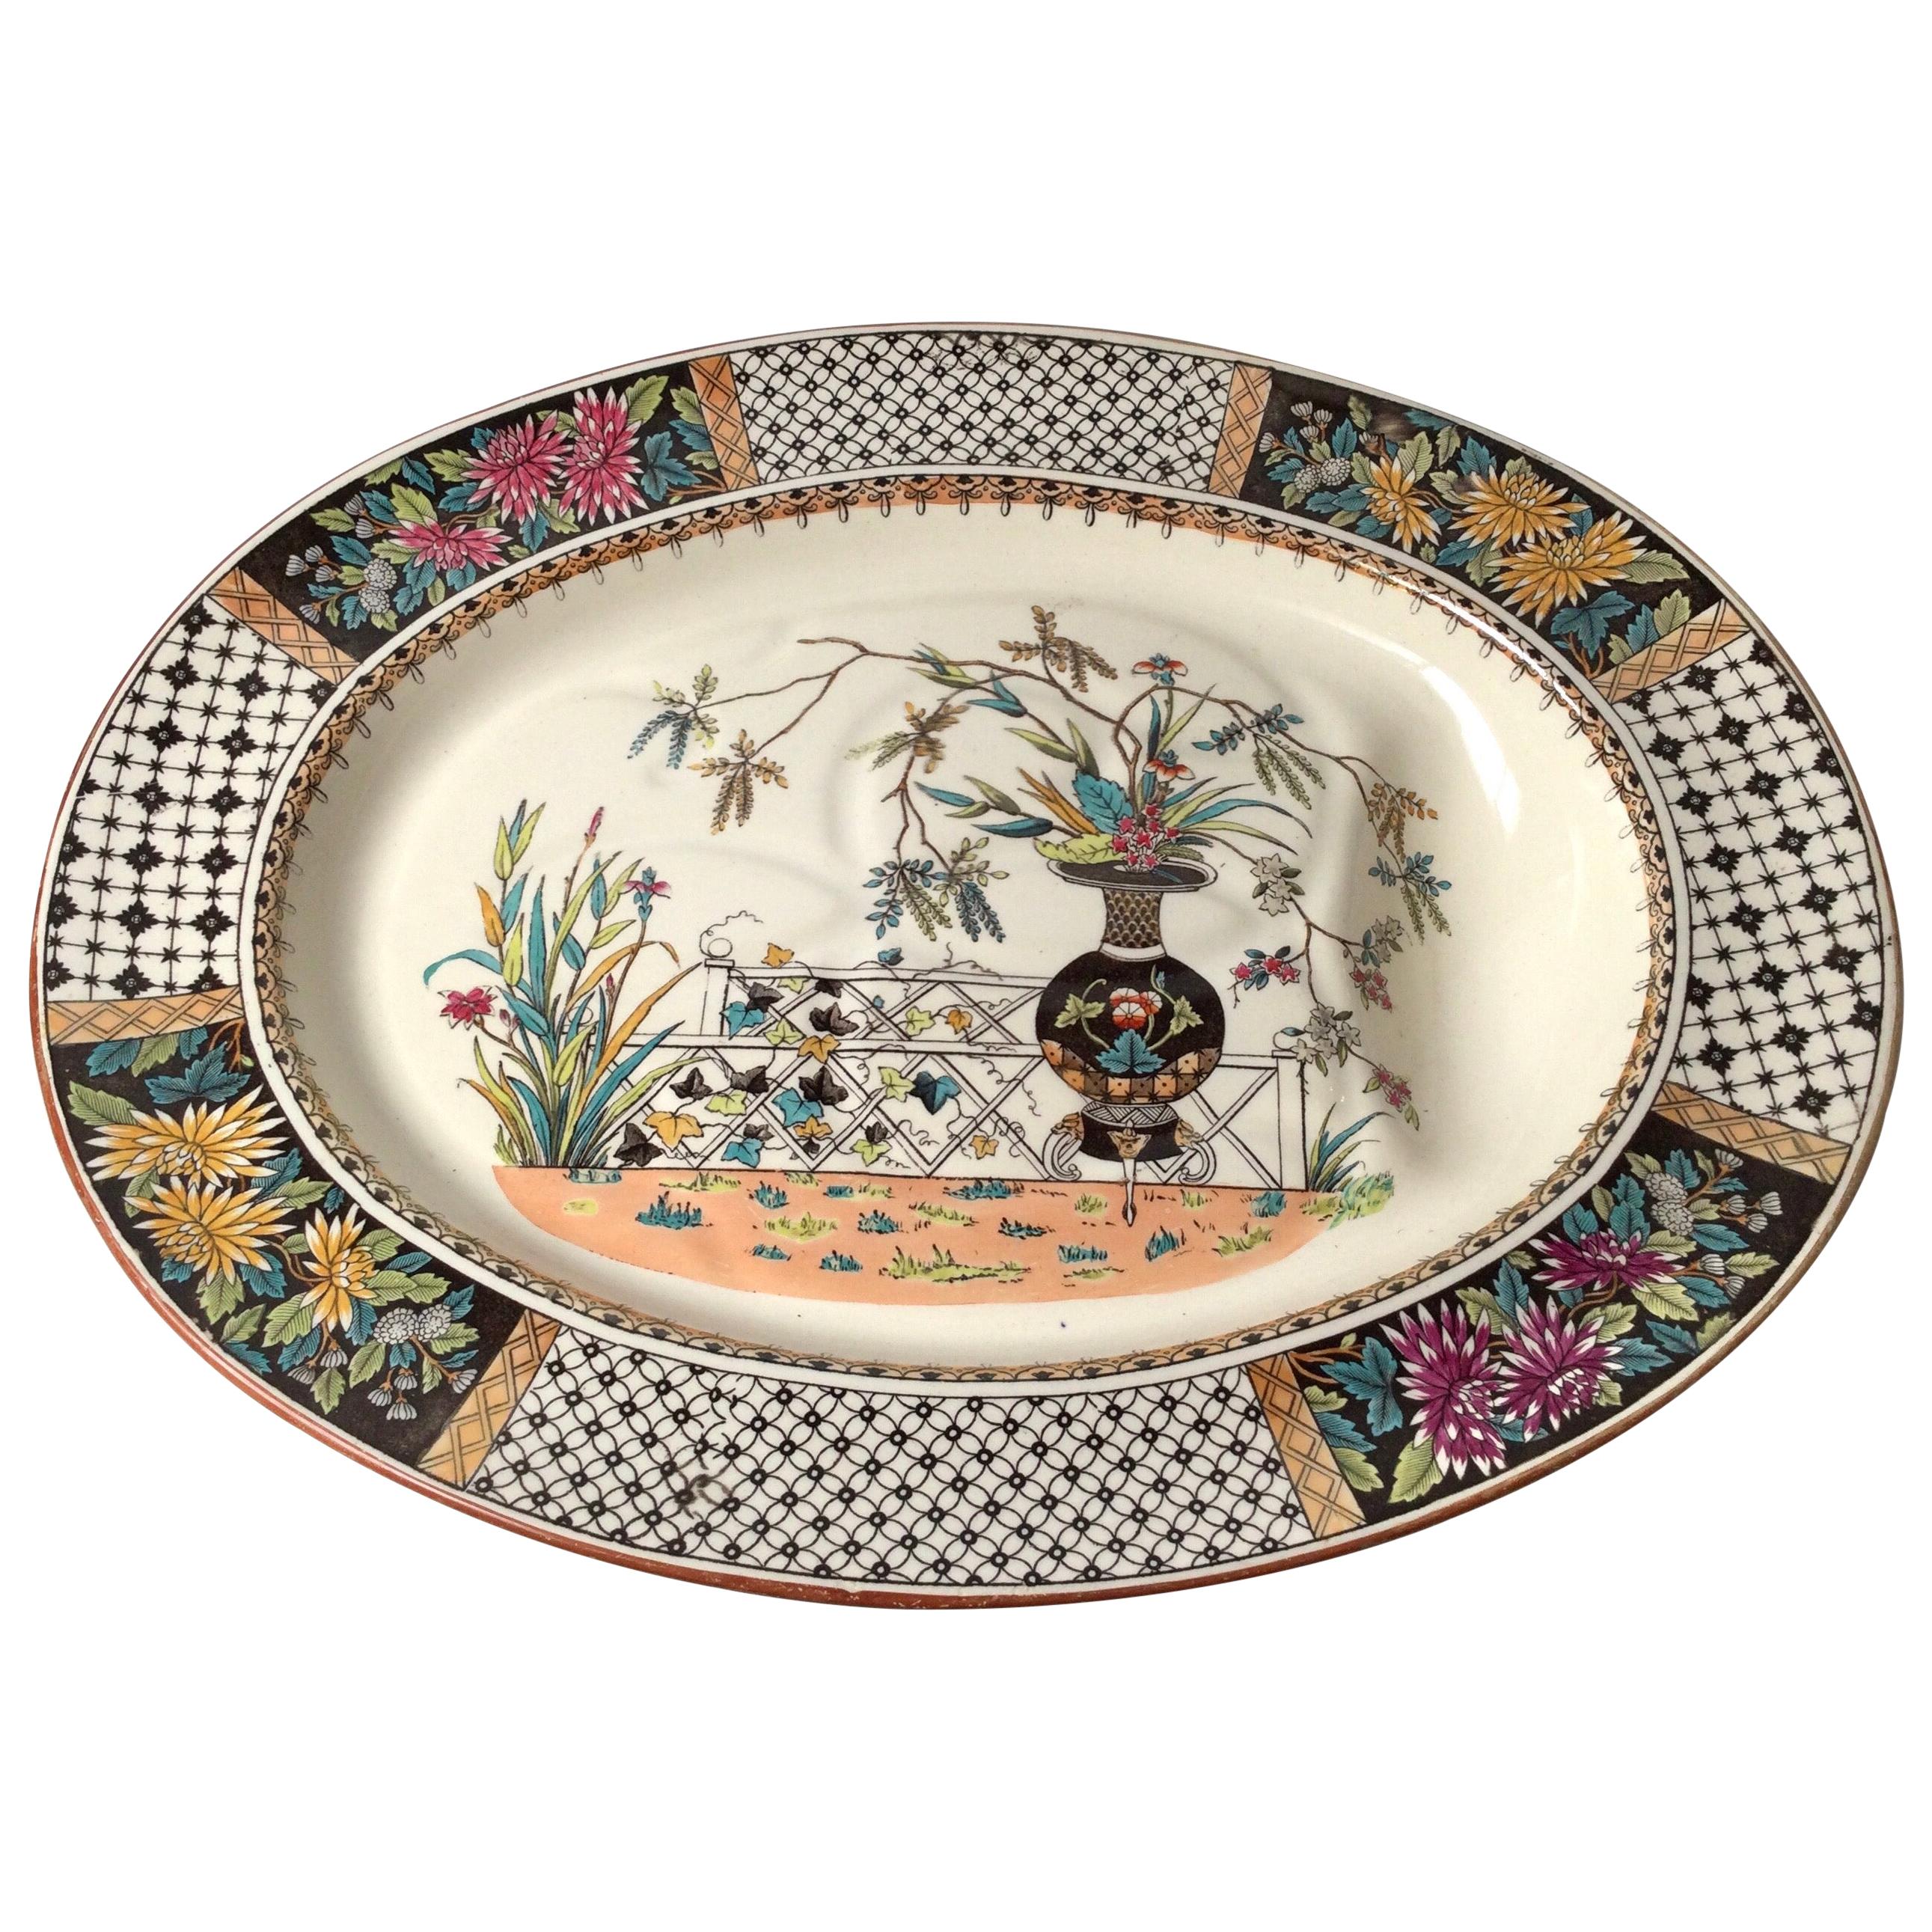 1900-1910 PRICE PER PLATE Societe Ceramique Decor Anna Antique Soup Plate